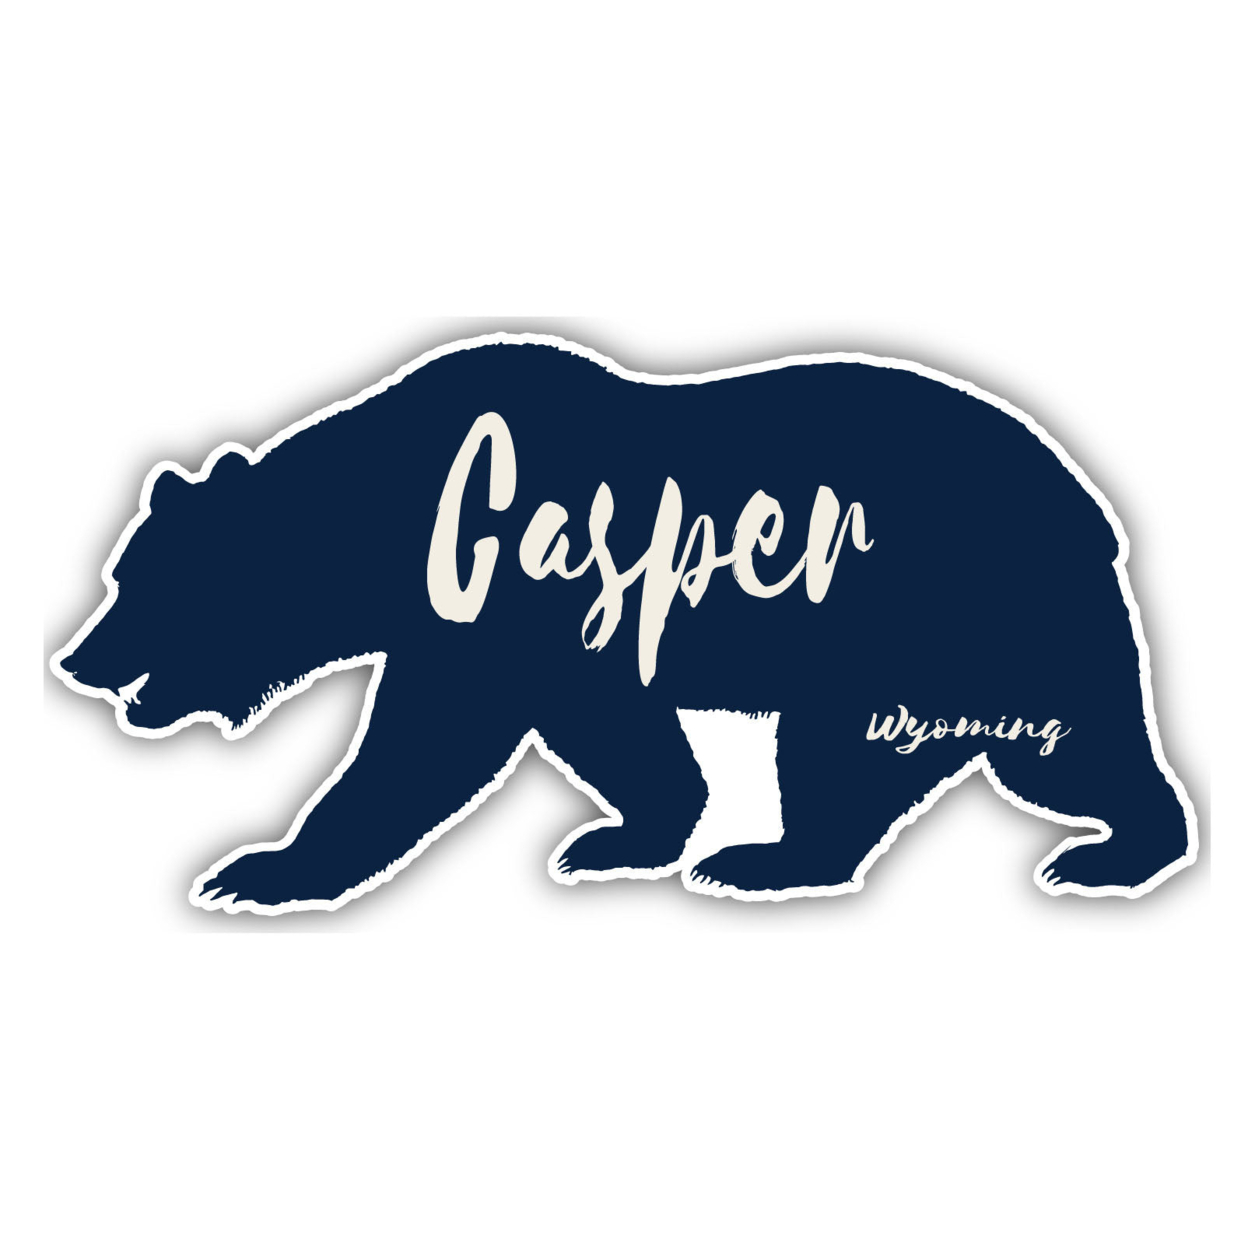 Casper Wyoming Souvenir Decorative Stickers (Choose Theme And Size) - Single Unit, 12-Inch, Tent